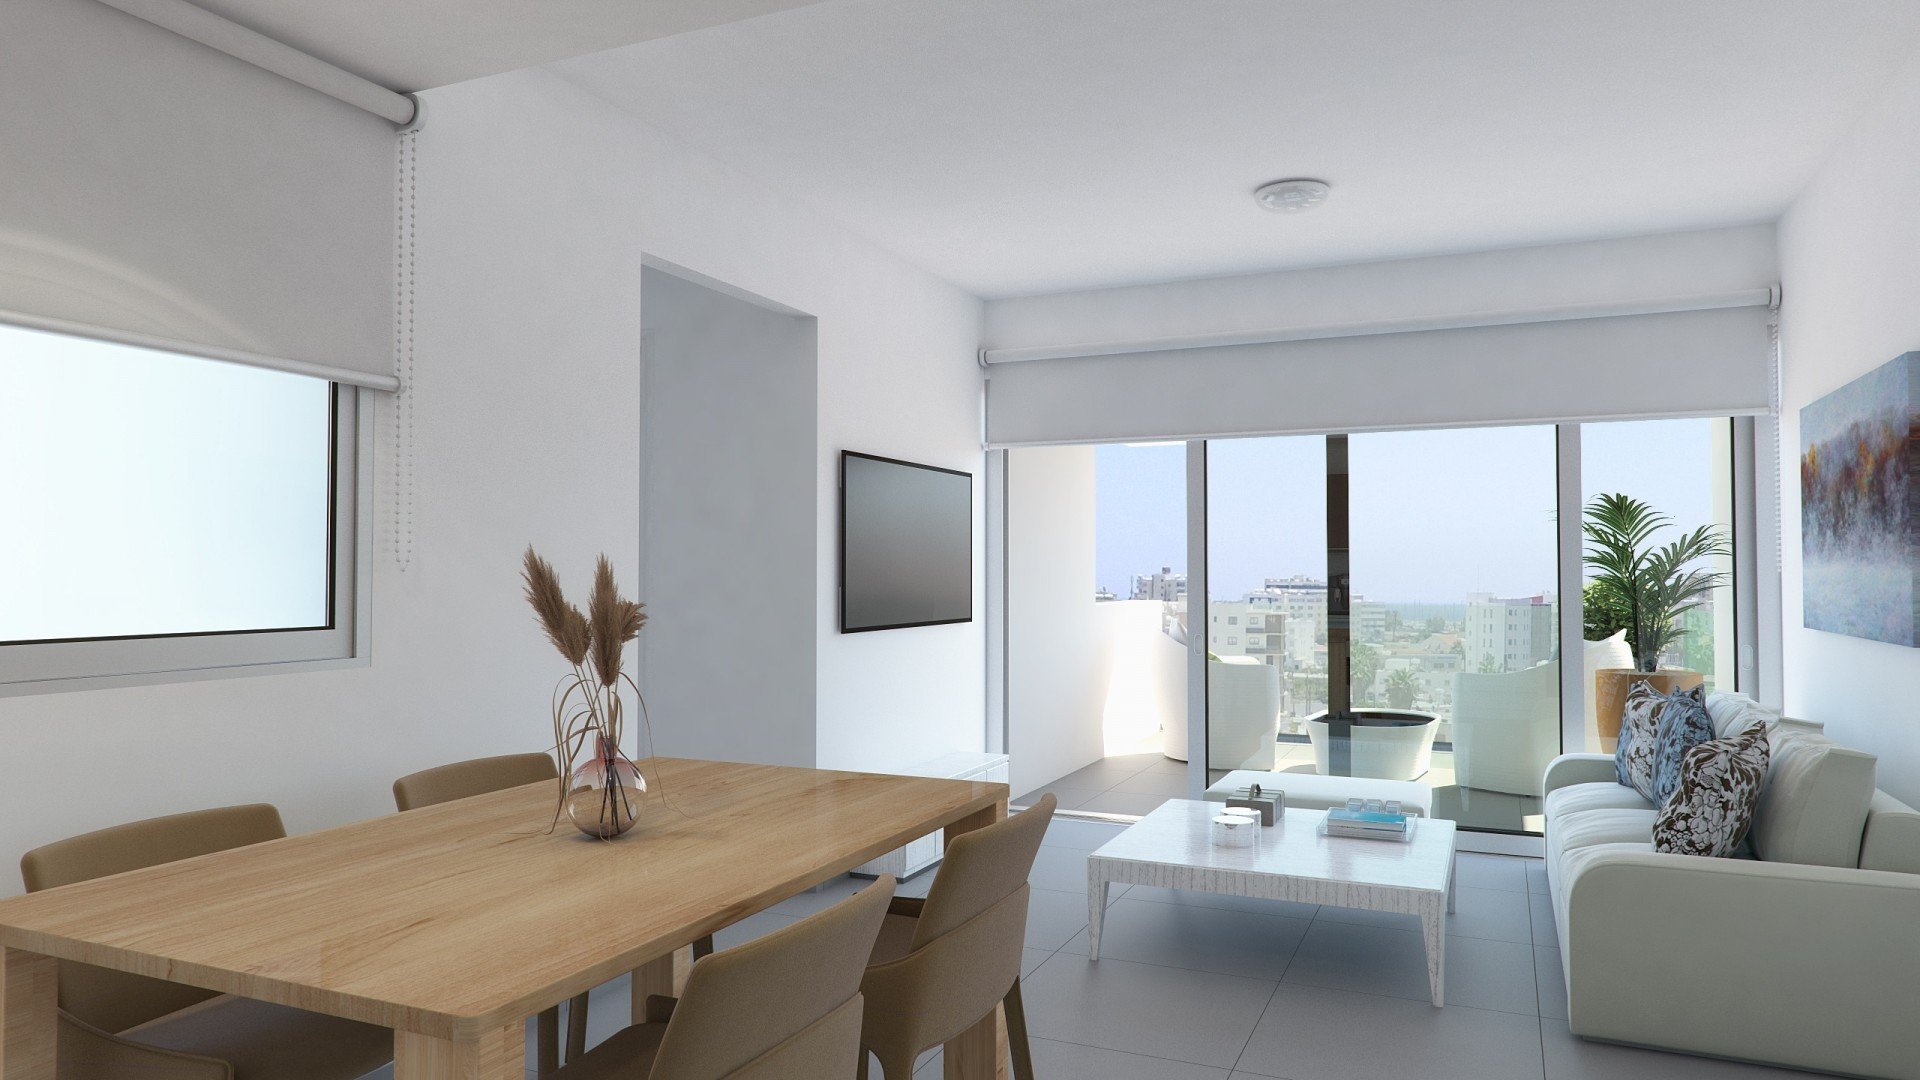 1 Bedroom Apartment for Sale in Limassol – Agios Spyridon